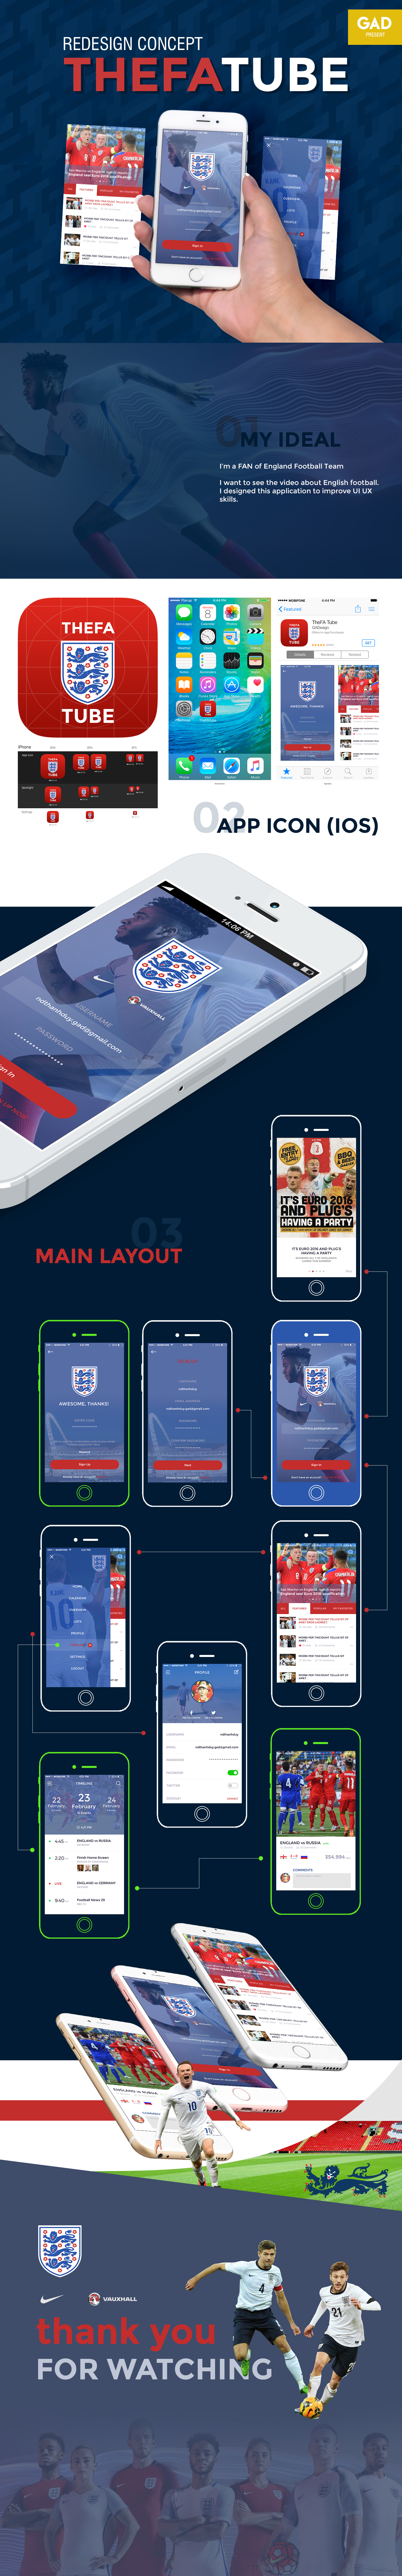 england football application mobile app mobile apps UI ux design